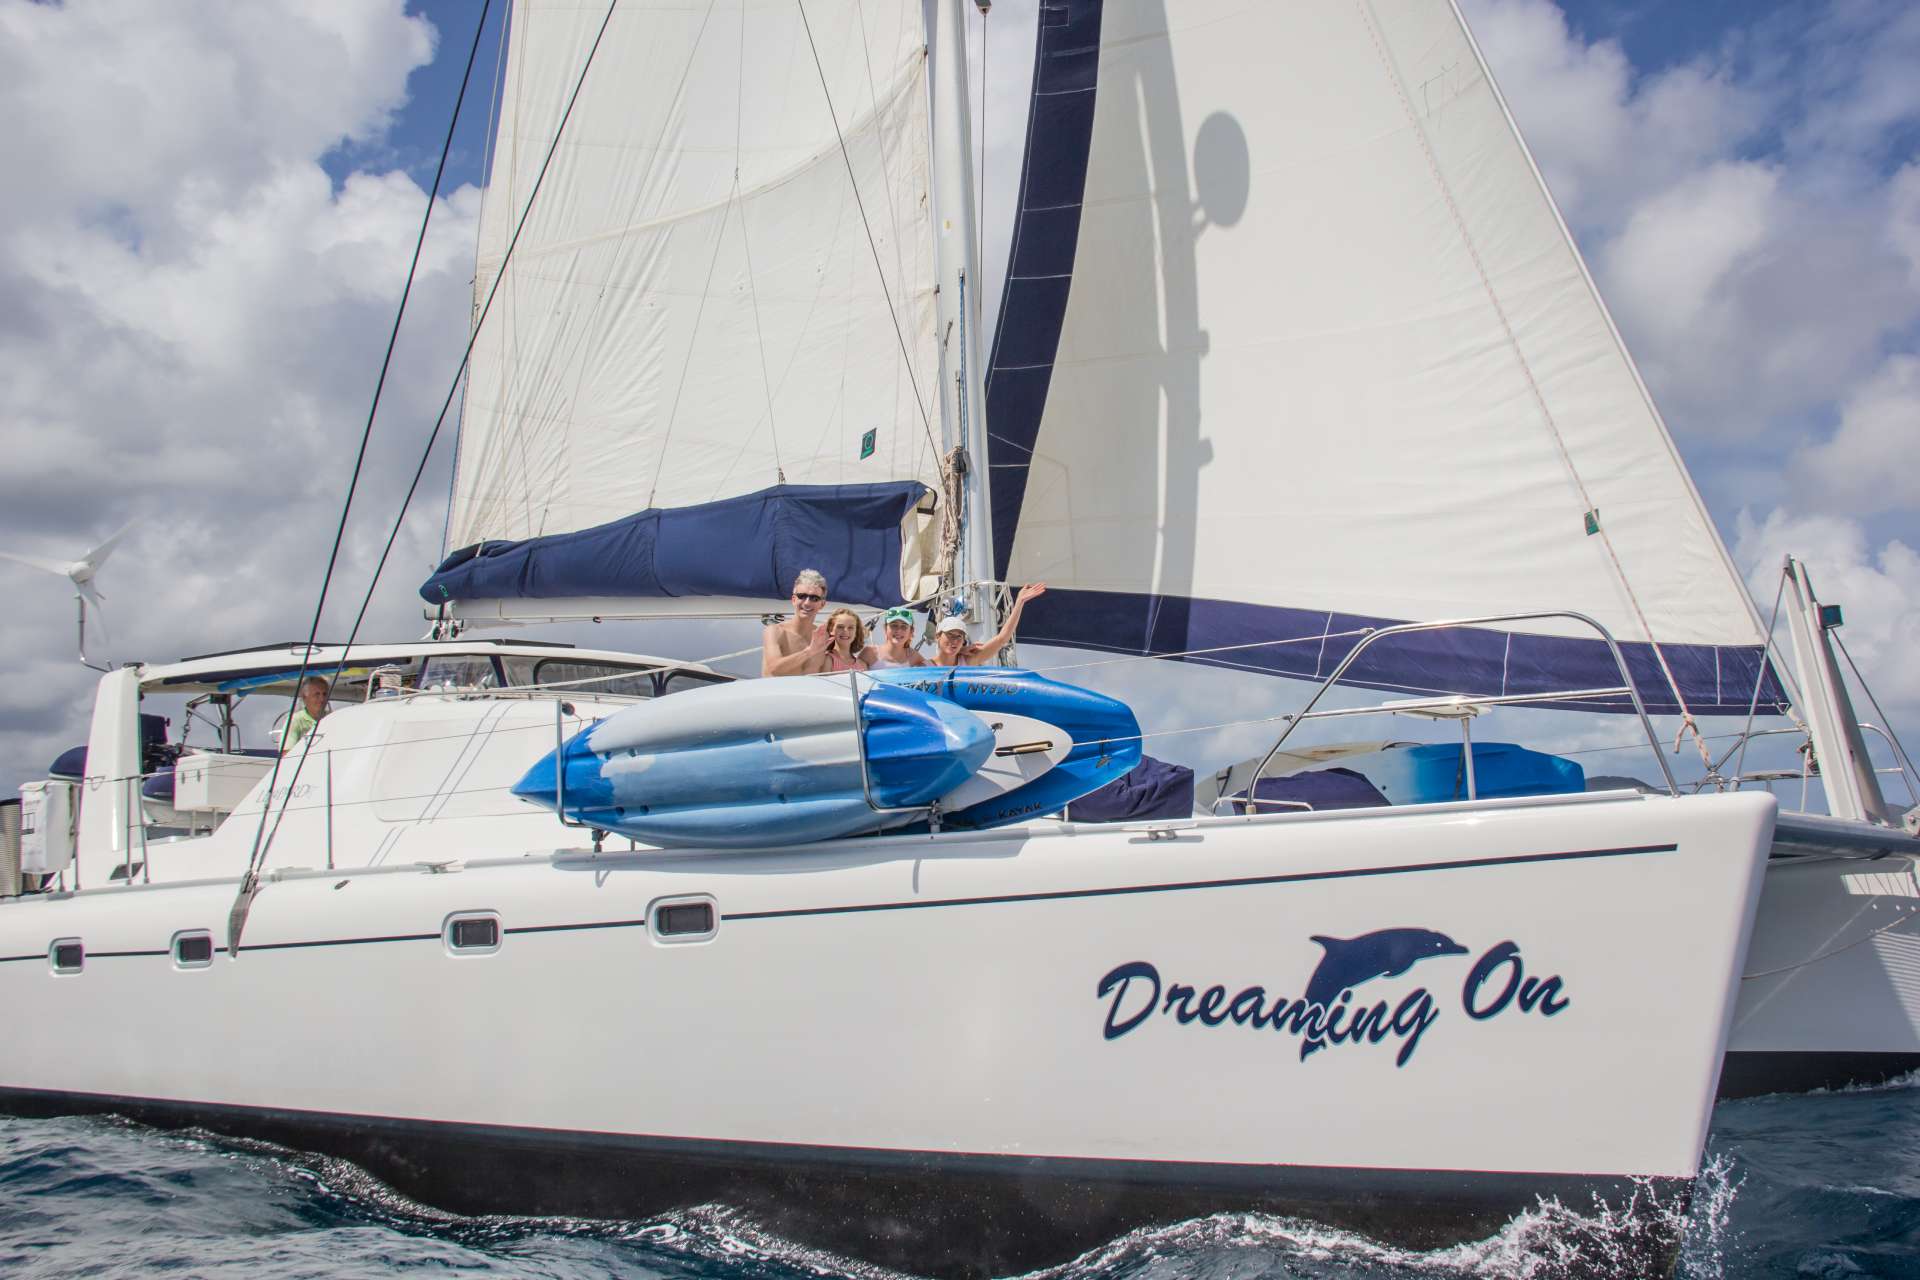 dreaming on - Yacht Charter Puntone di Scarlino & Boat hire in Central america, Belize 2